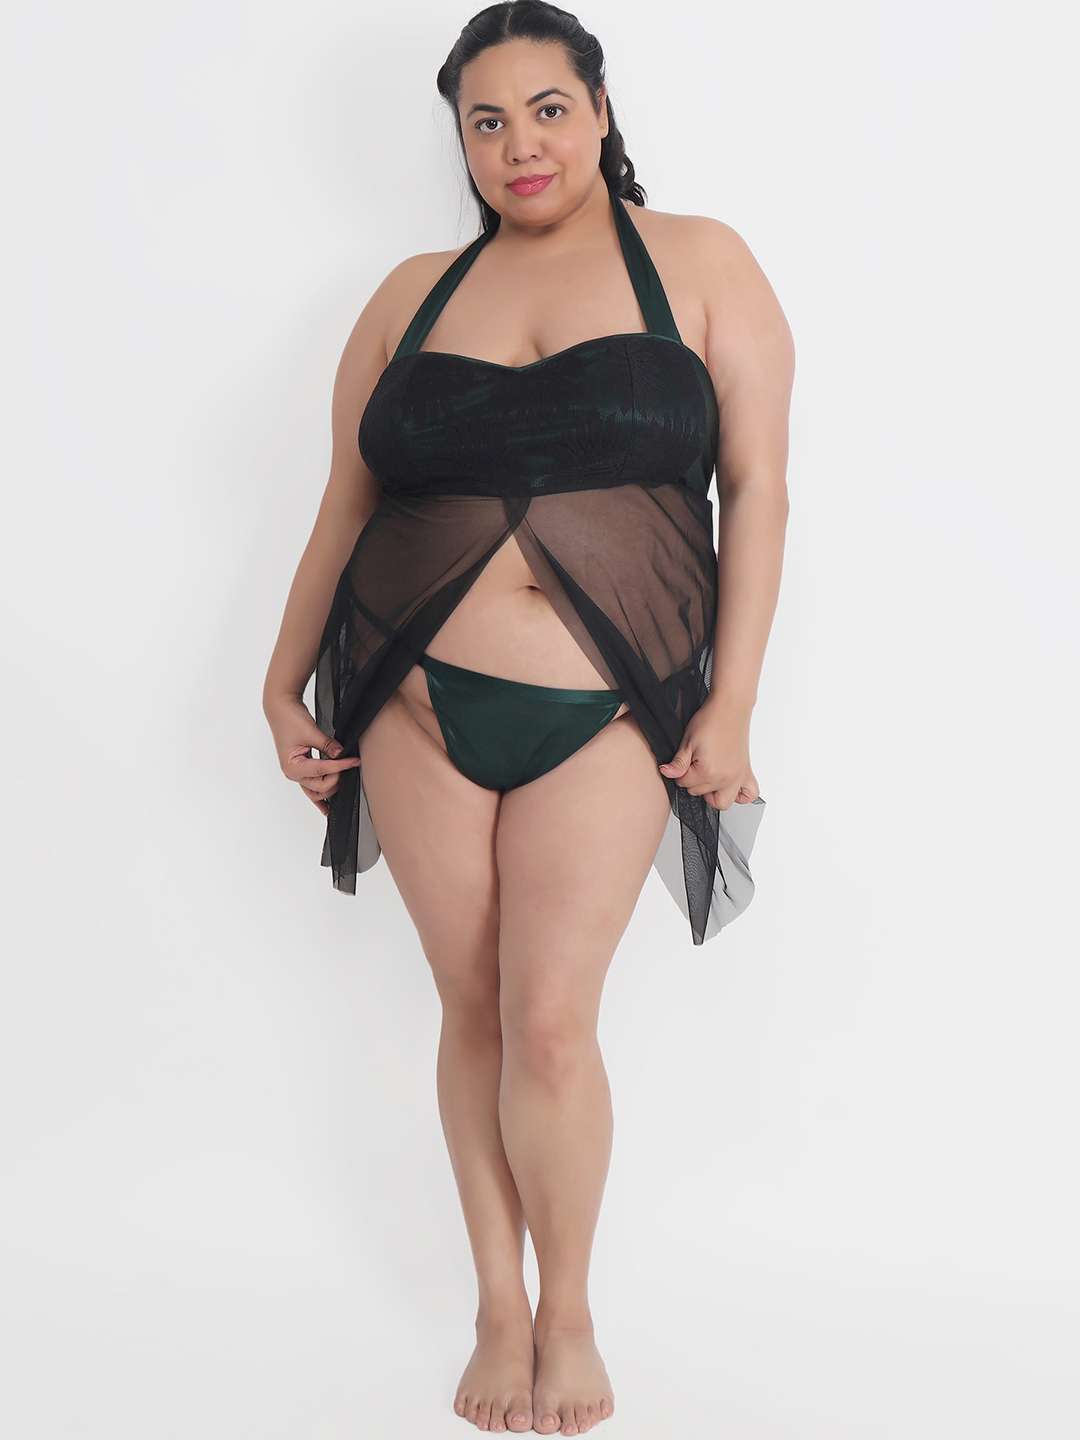 Plus Size Bikini Leotard Dress Swimsuit with Stripes | Lovebird Lingerie